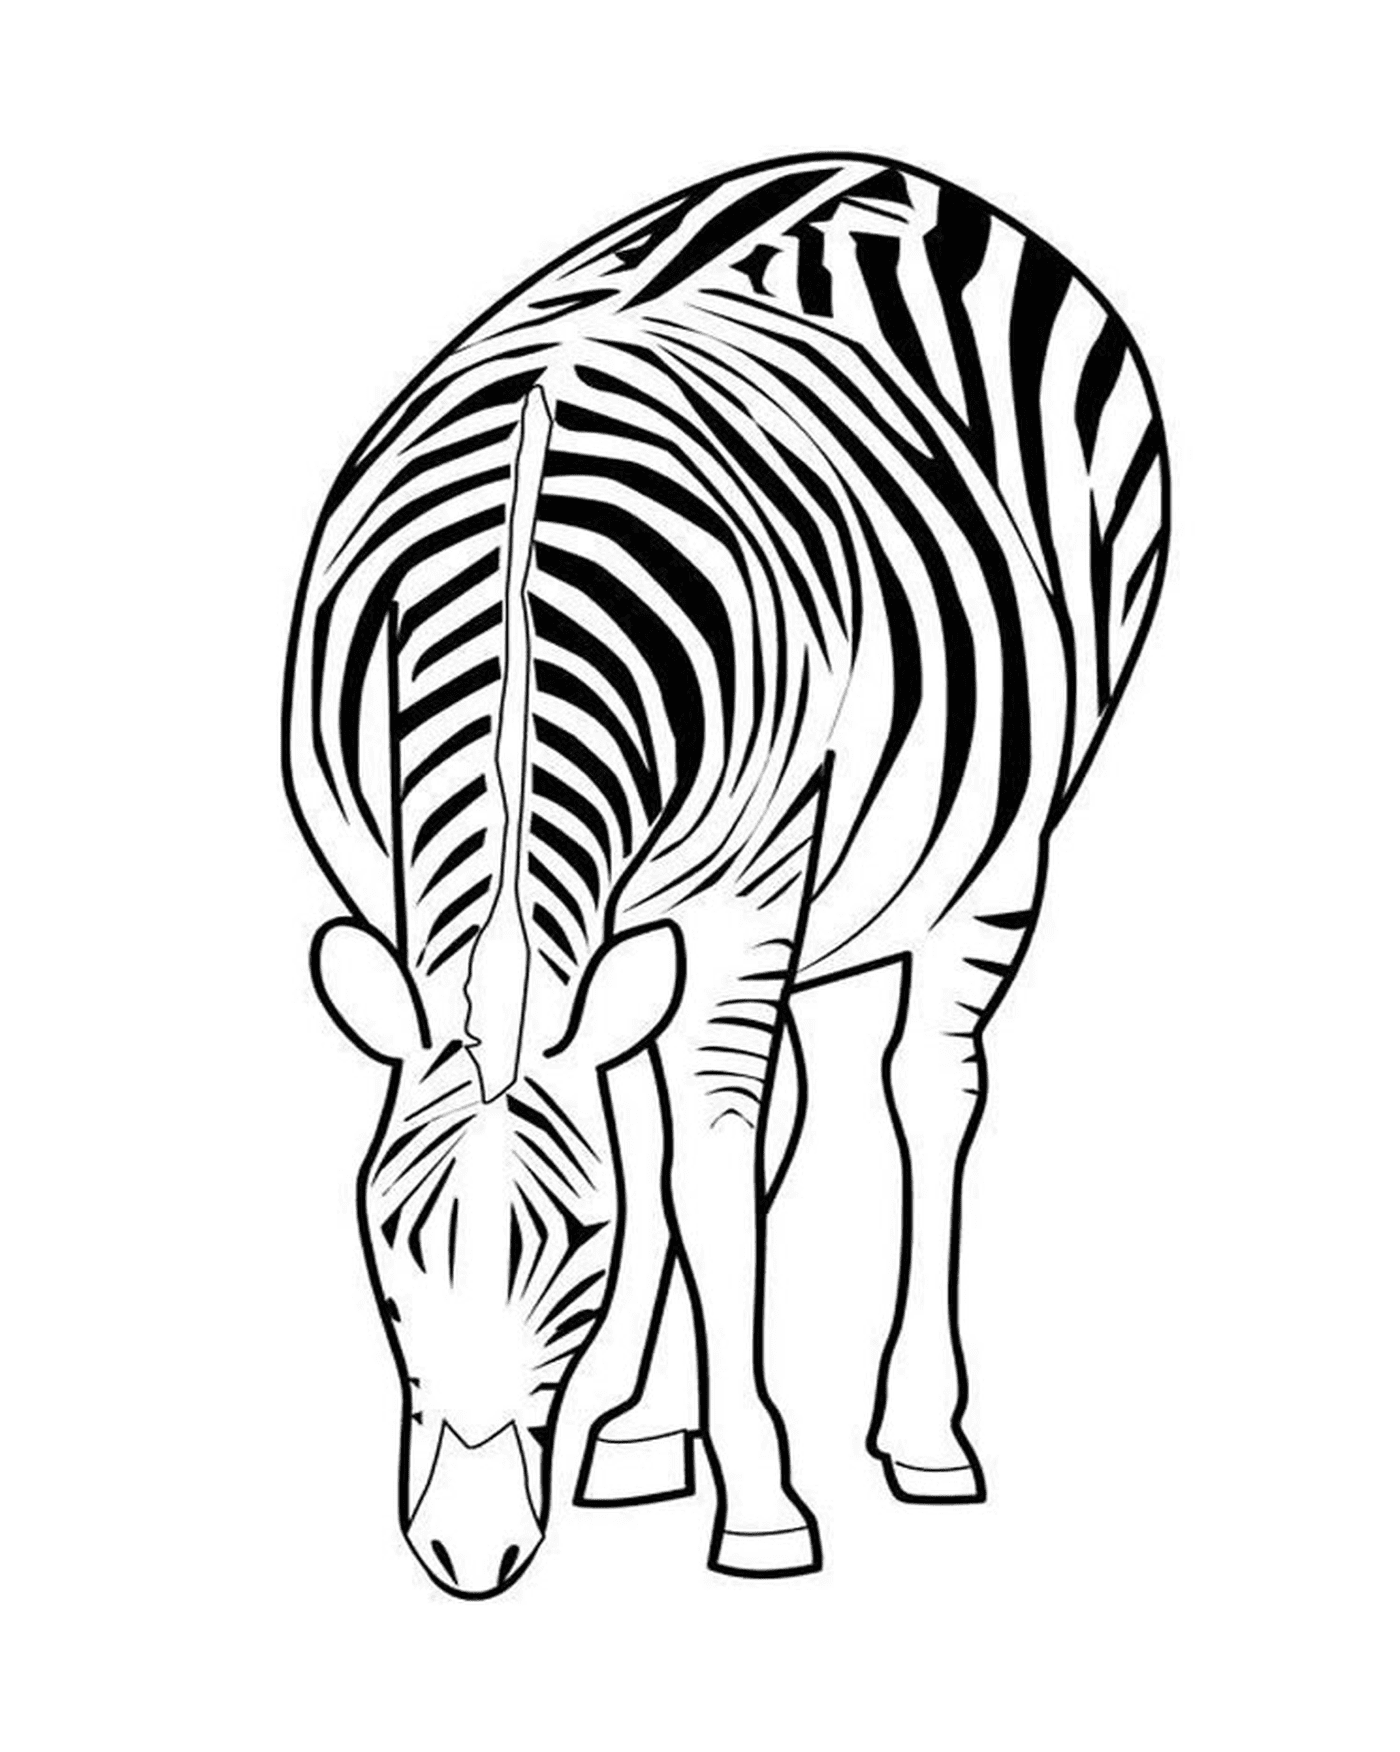  zebra elegante em seu habitat 